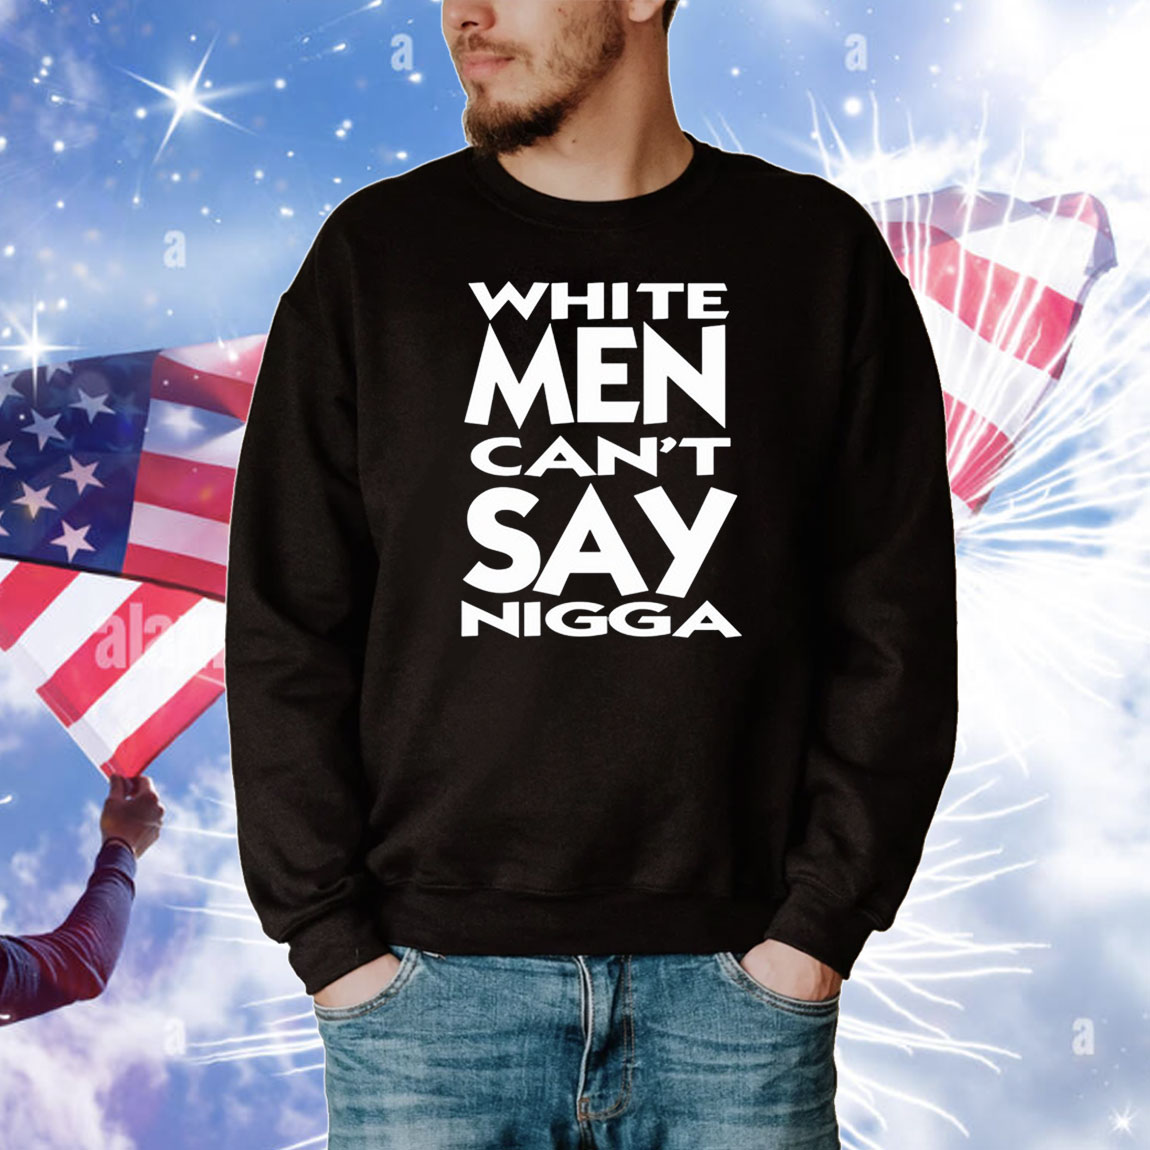 White Men Can't Say Nigga Shirts